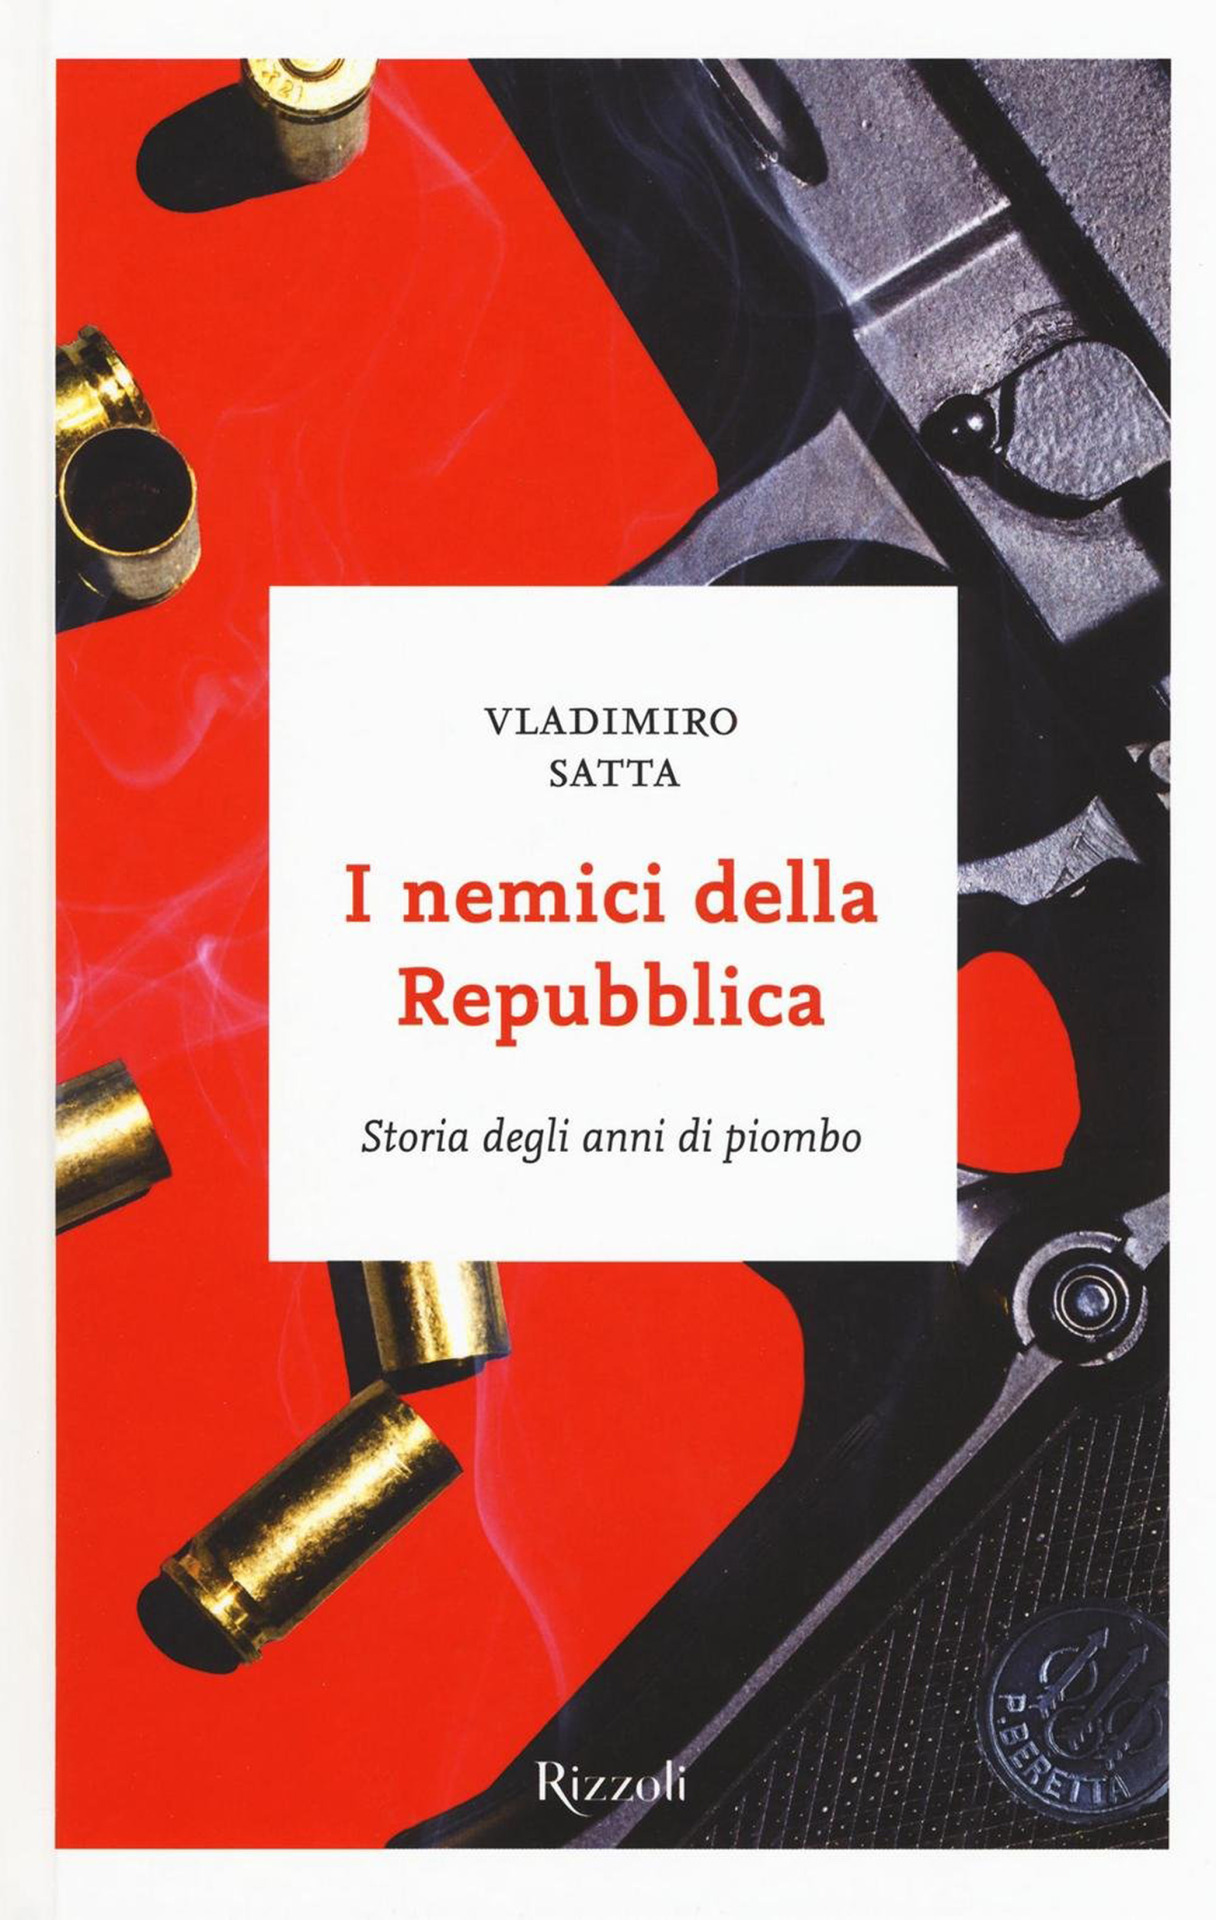 Cover book for Rizzoli